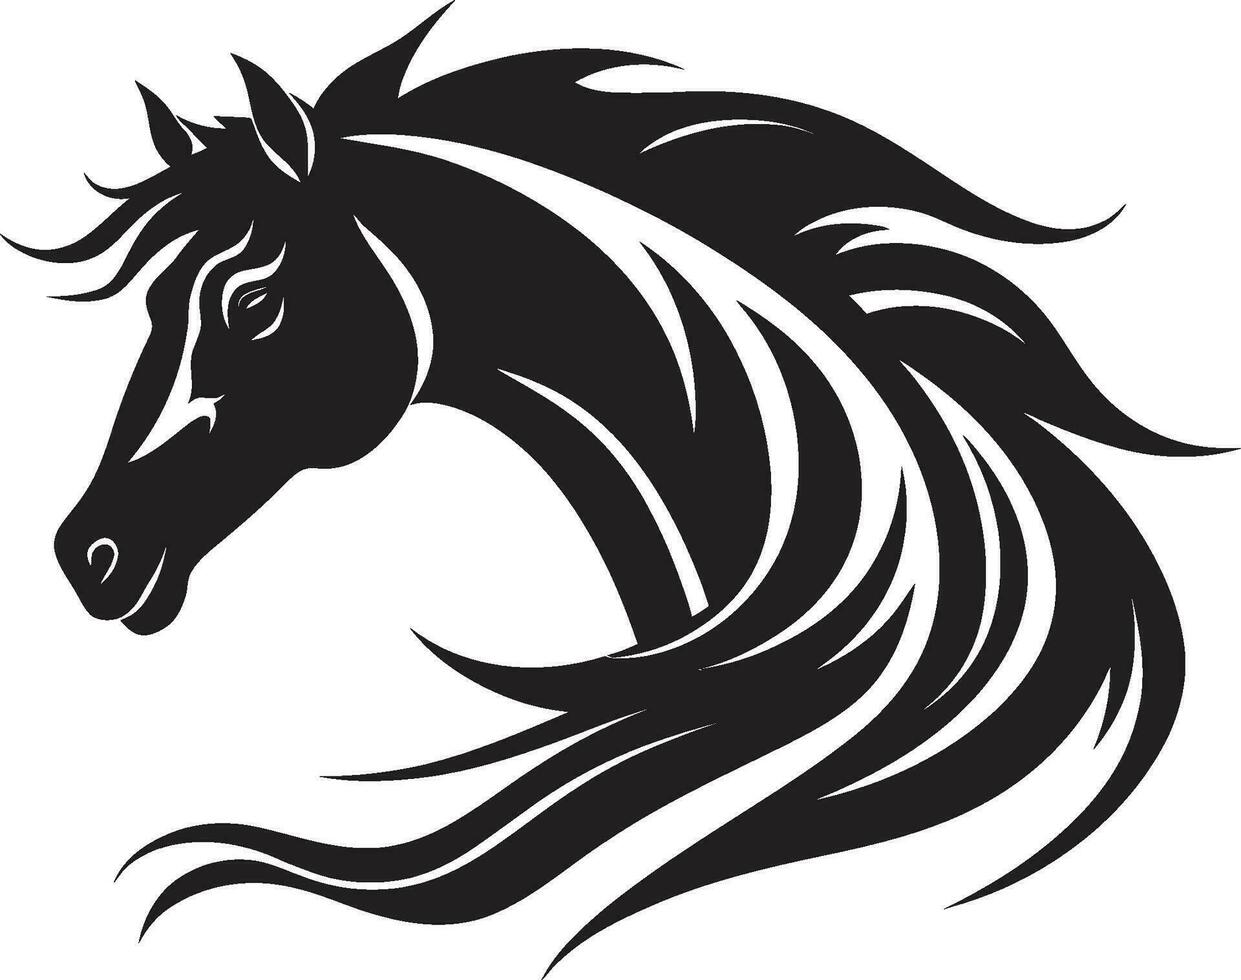 Majestic Muscles Black Vector Depiction of Equine Grace Riders Pride Monochrome Vector Art Celebrating Horses Nobility